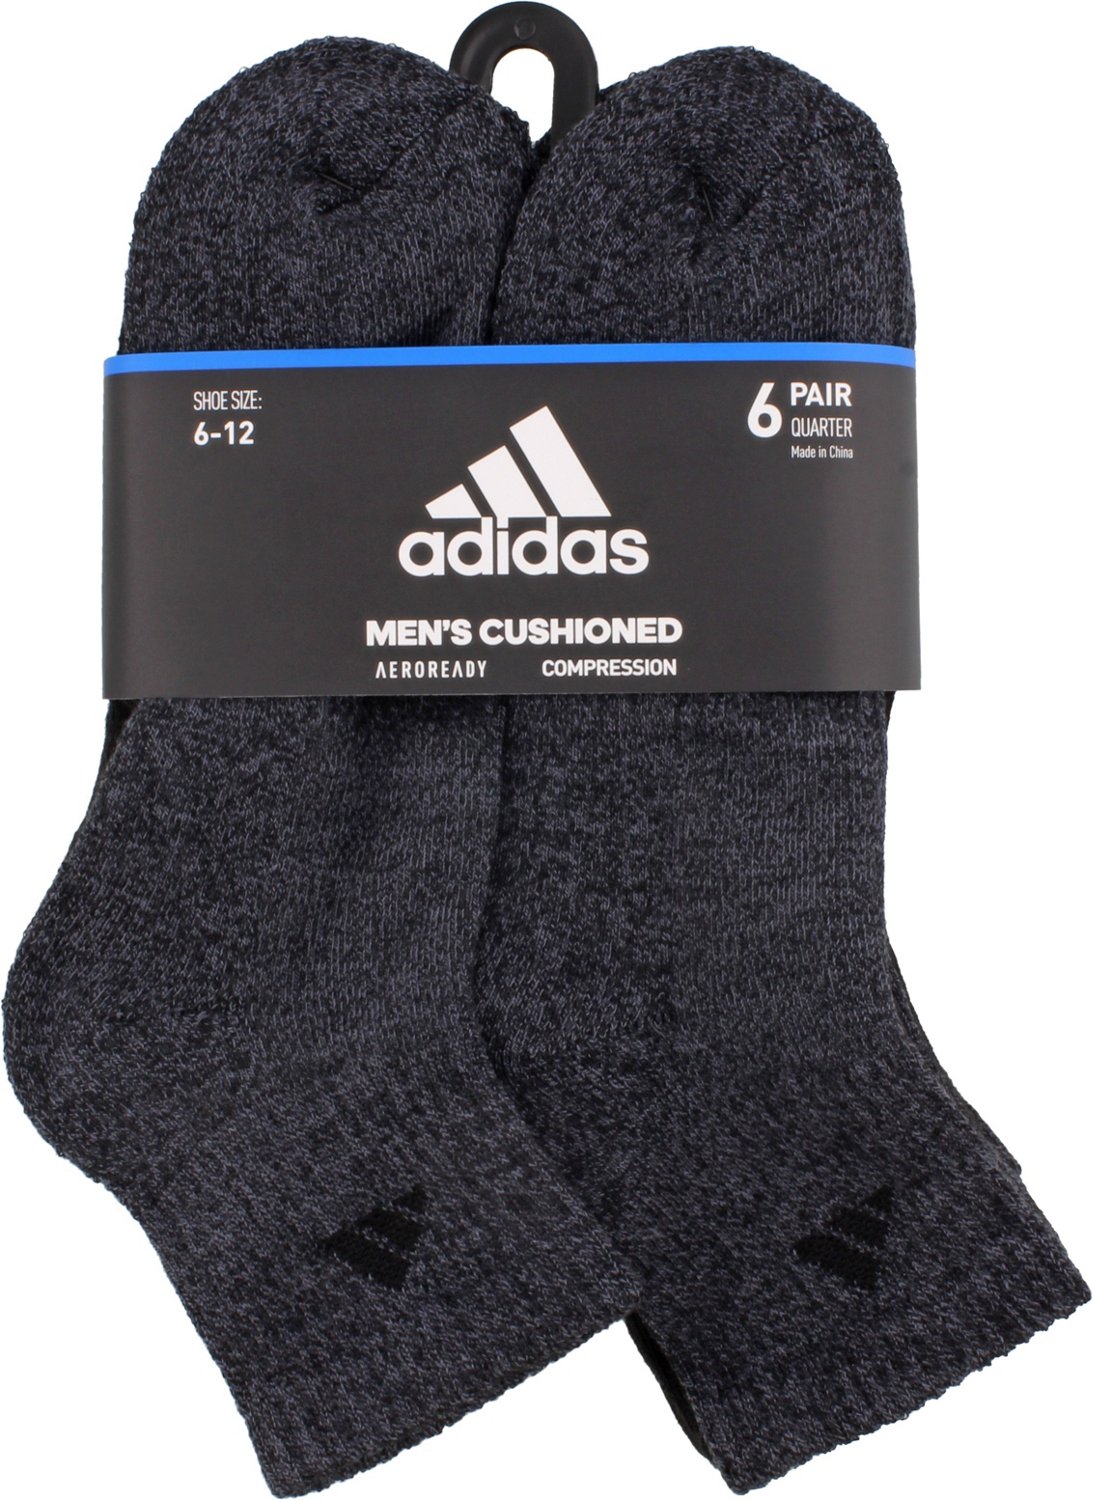 adidas Men's Large Athletic Quarter Socks 6 Pack | Academy